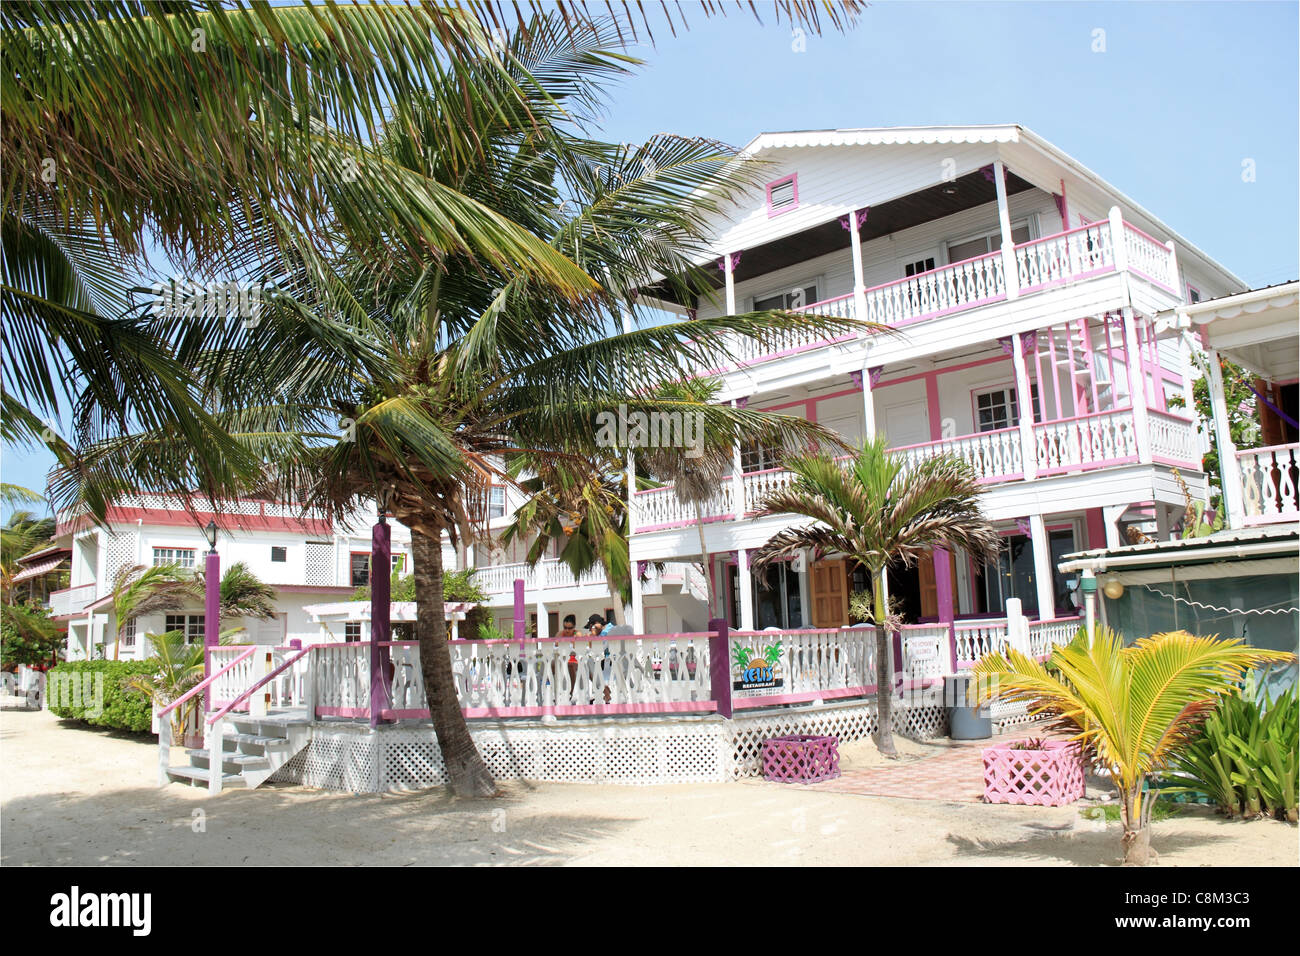 San Pedro Holiday Hotel and Celis Restaurant, Ambergris Caye (aka La Isla Bonita), Barrier Reef, Belize, Caribbean, Central America Stock Photo